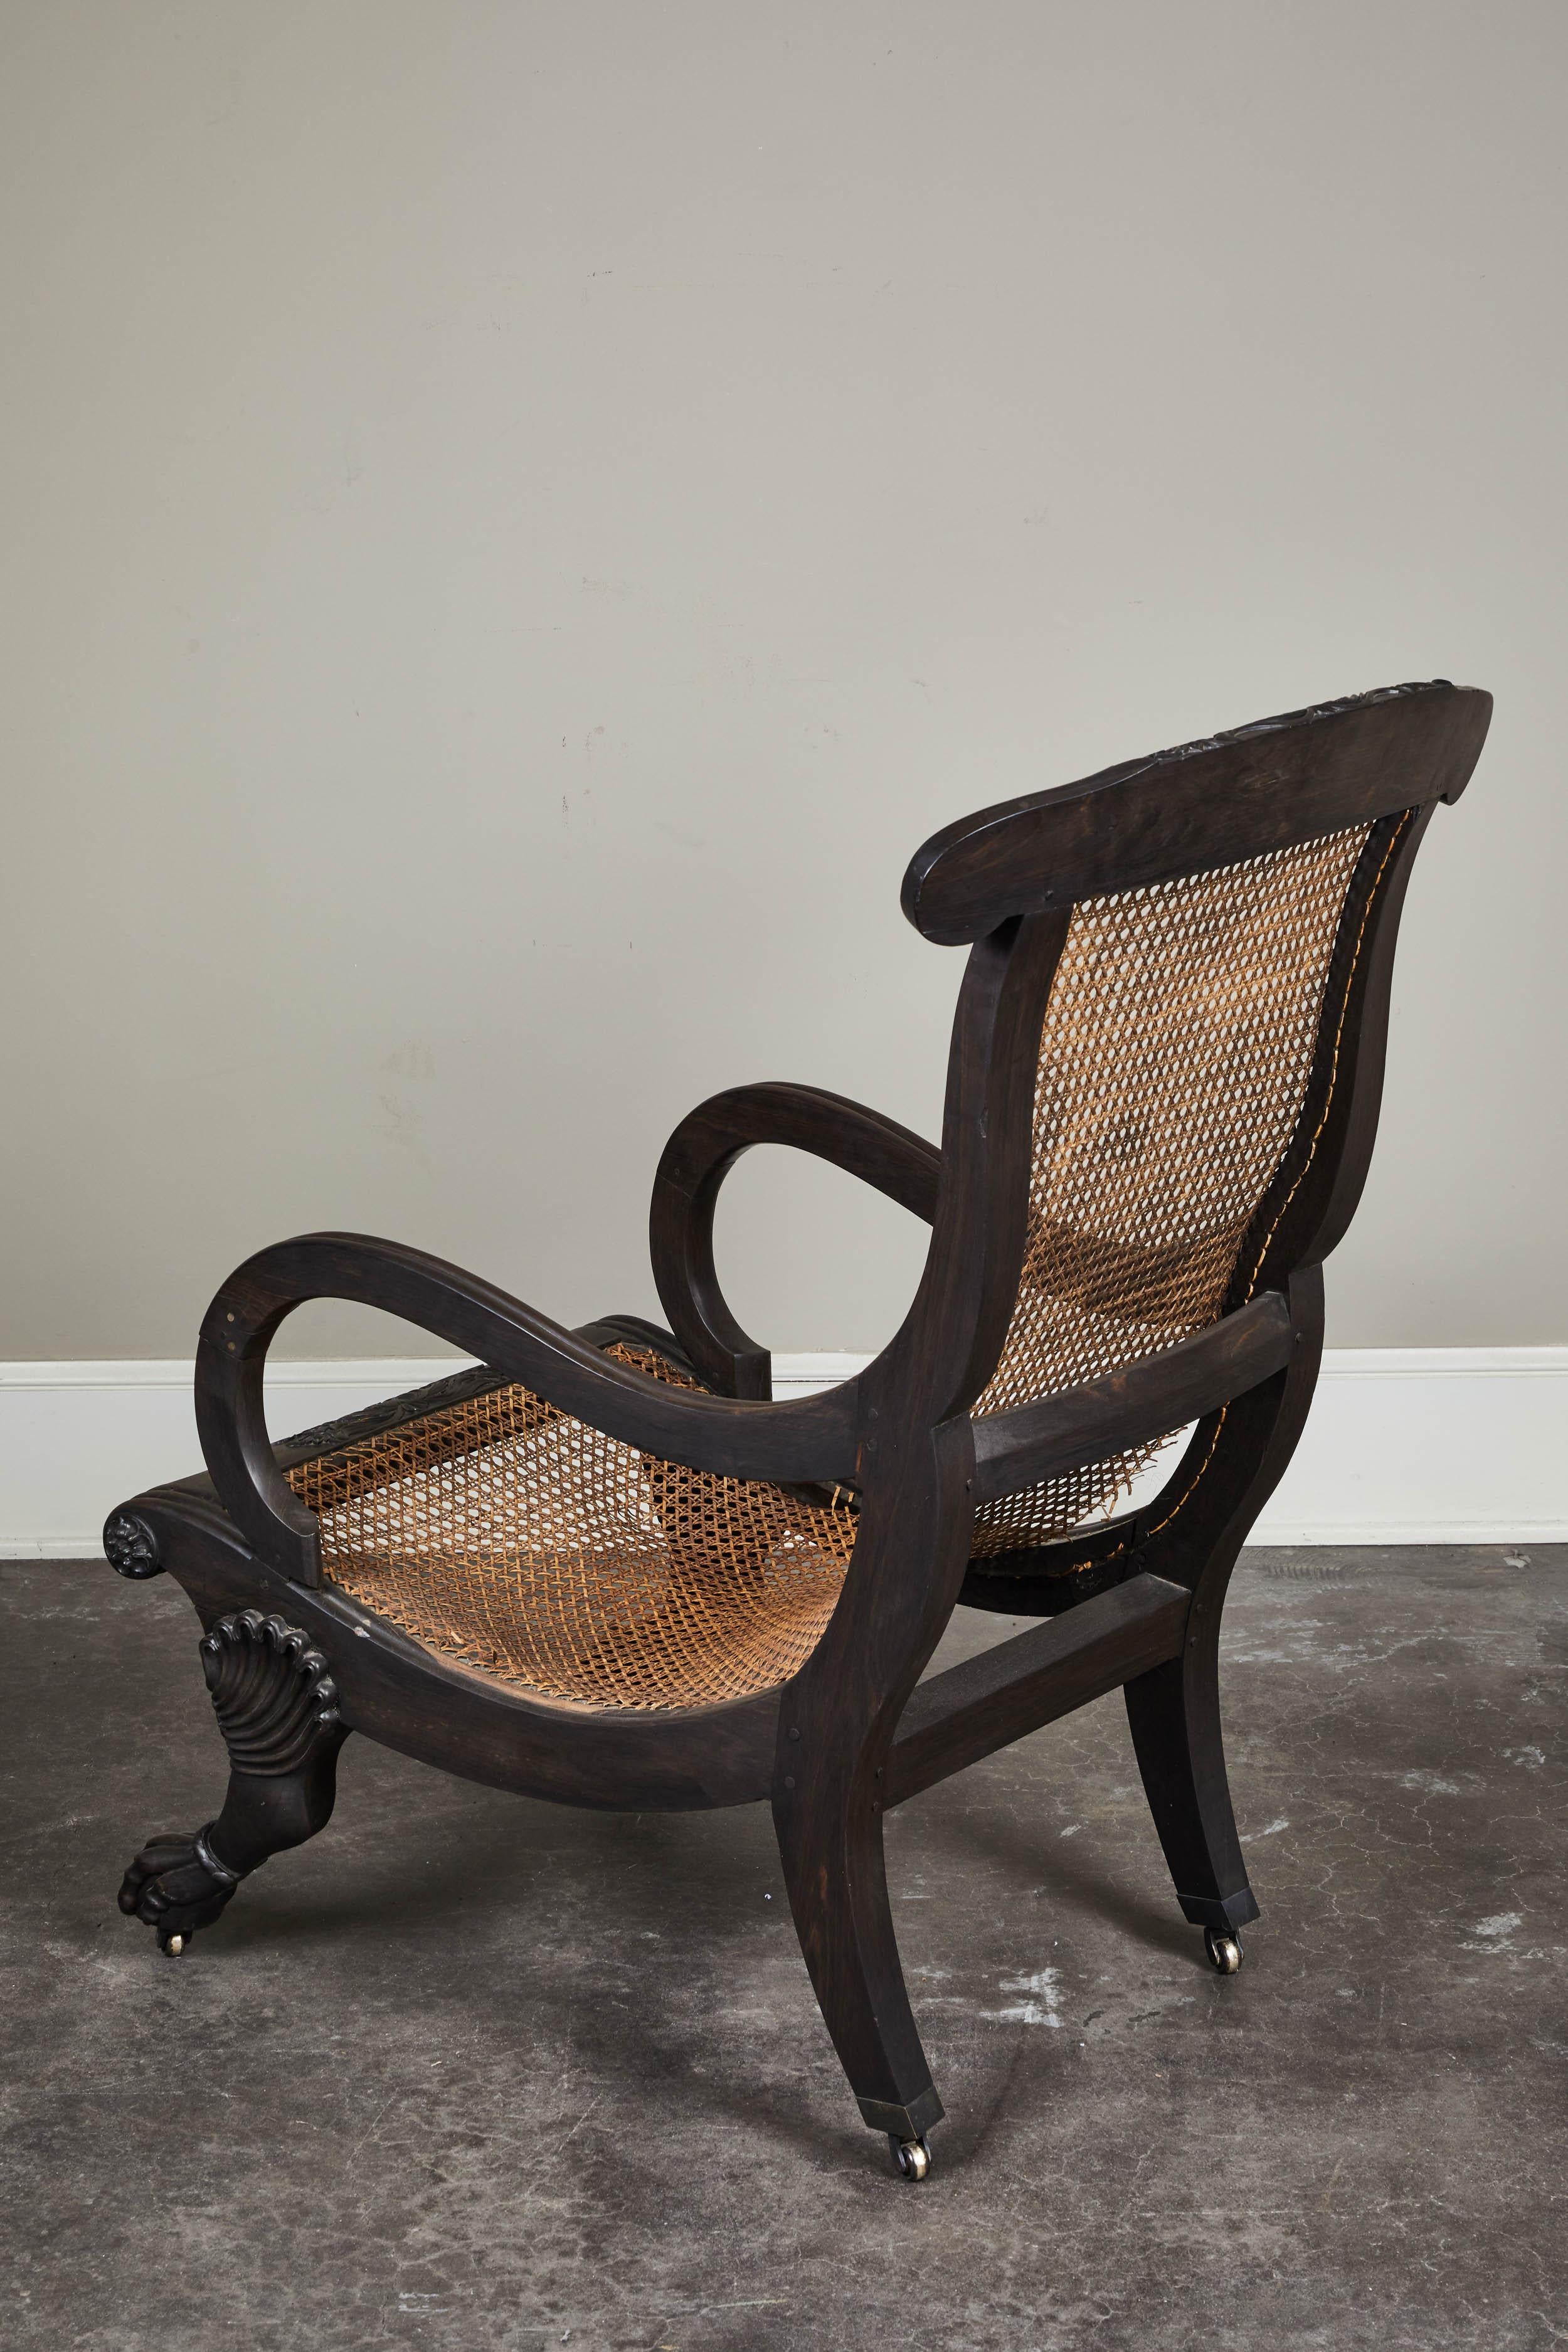 Rattan 19th Century British Colonial/Regency Ebony Chair For Sale